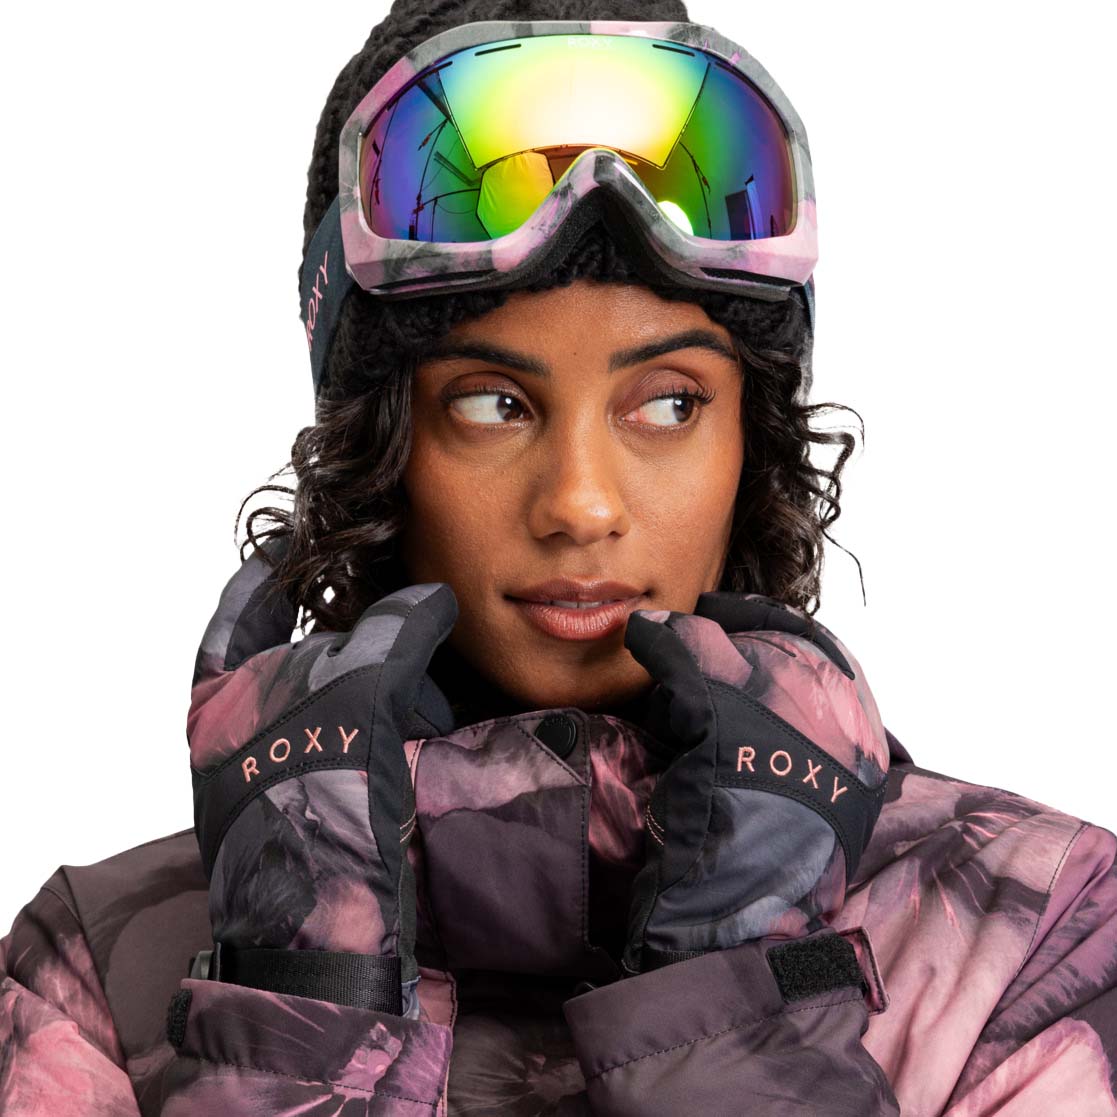 Roxy Jetty Women's Snowboard/Ski Gloves